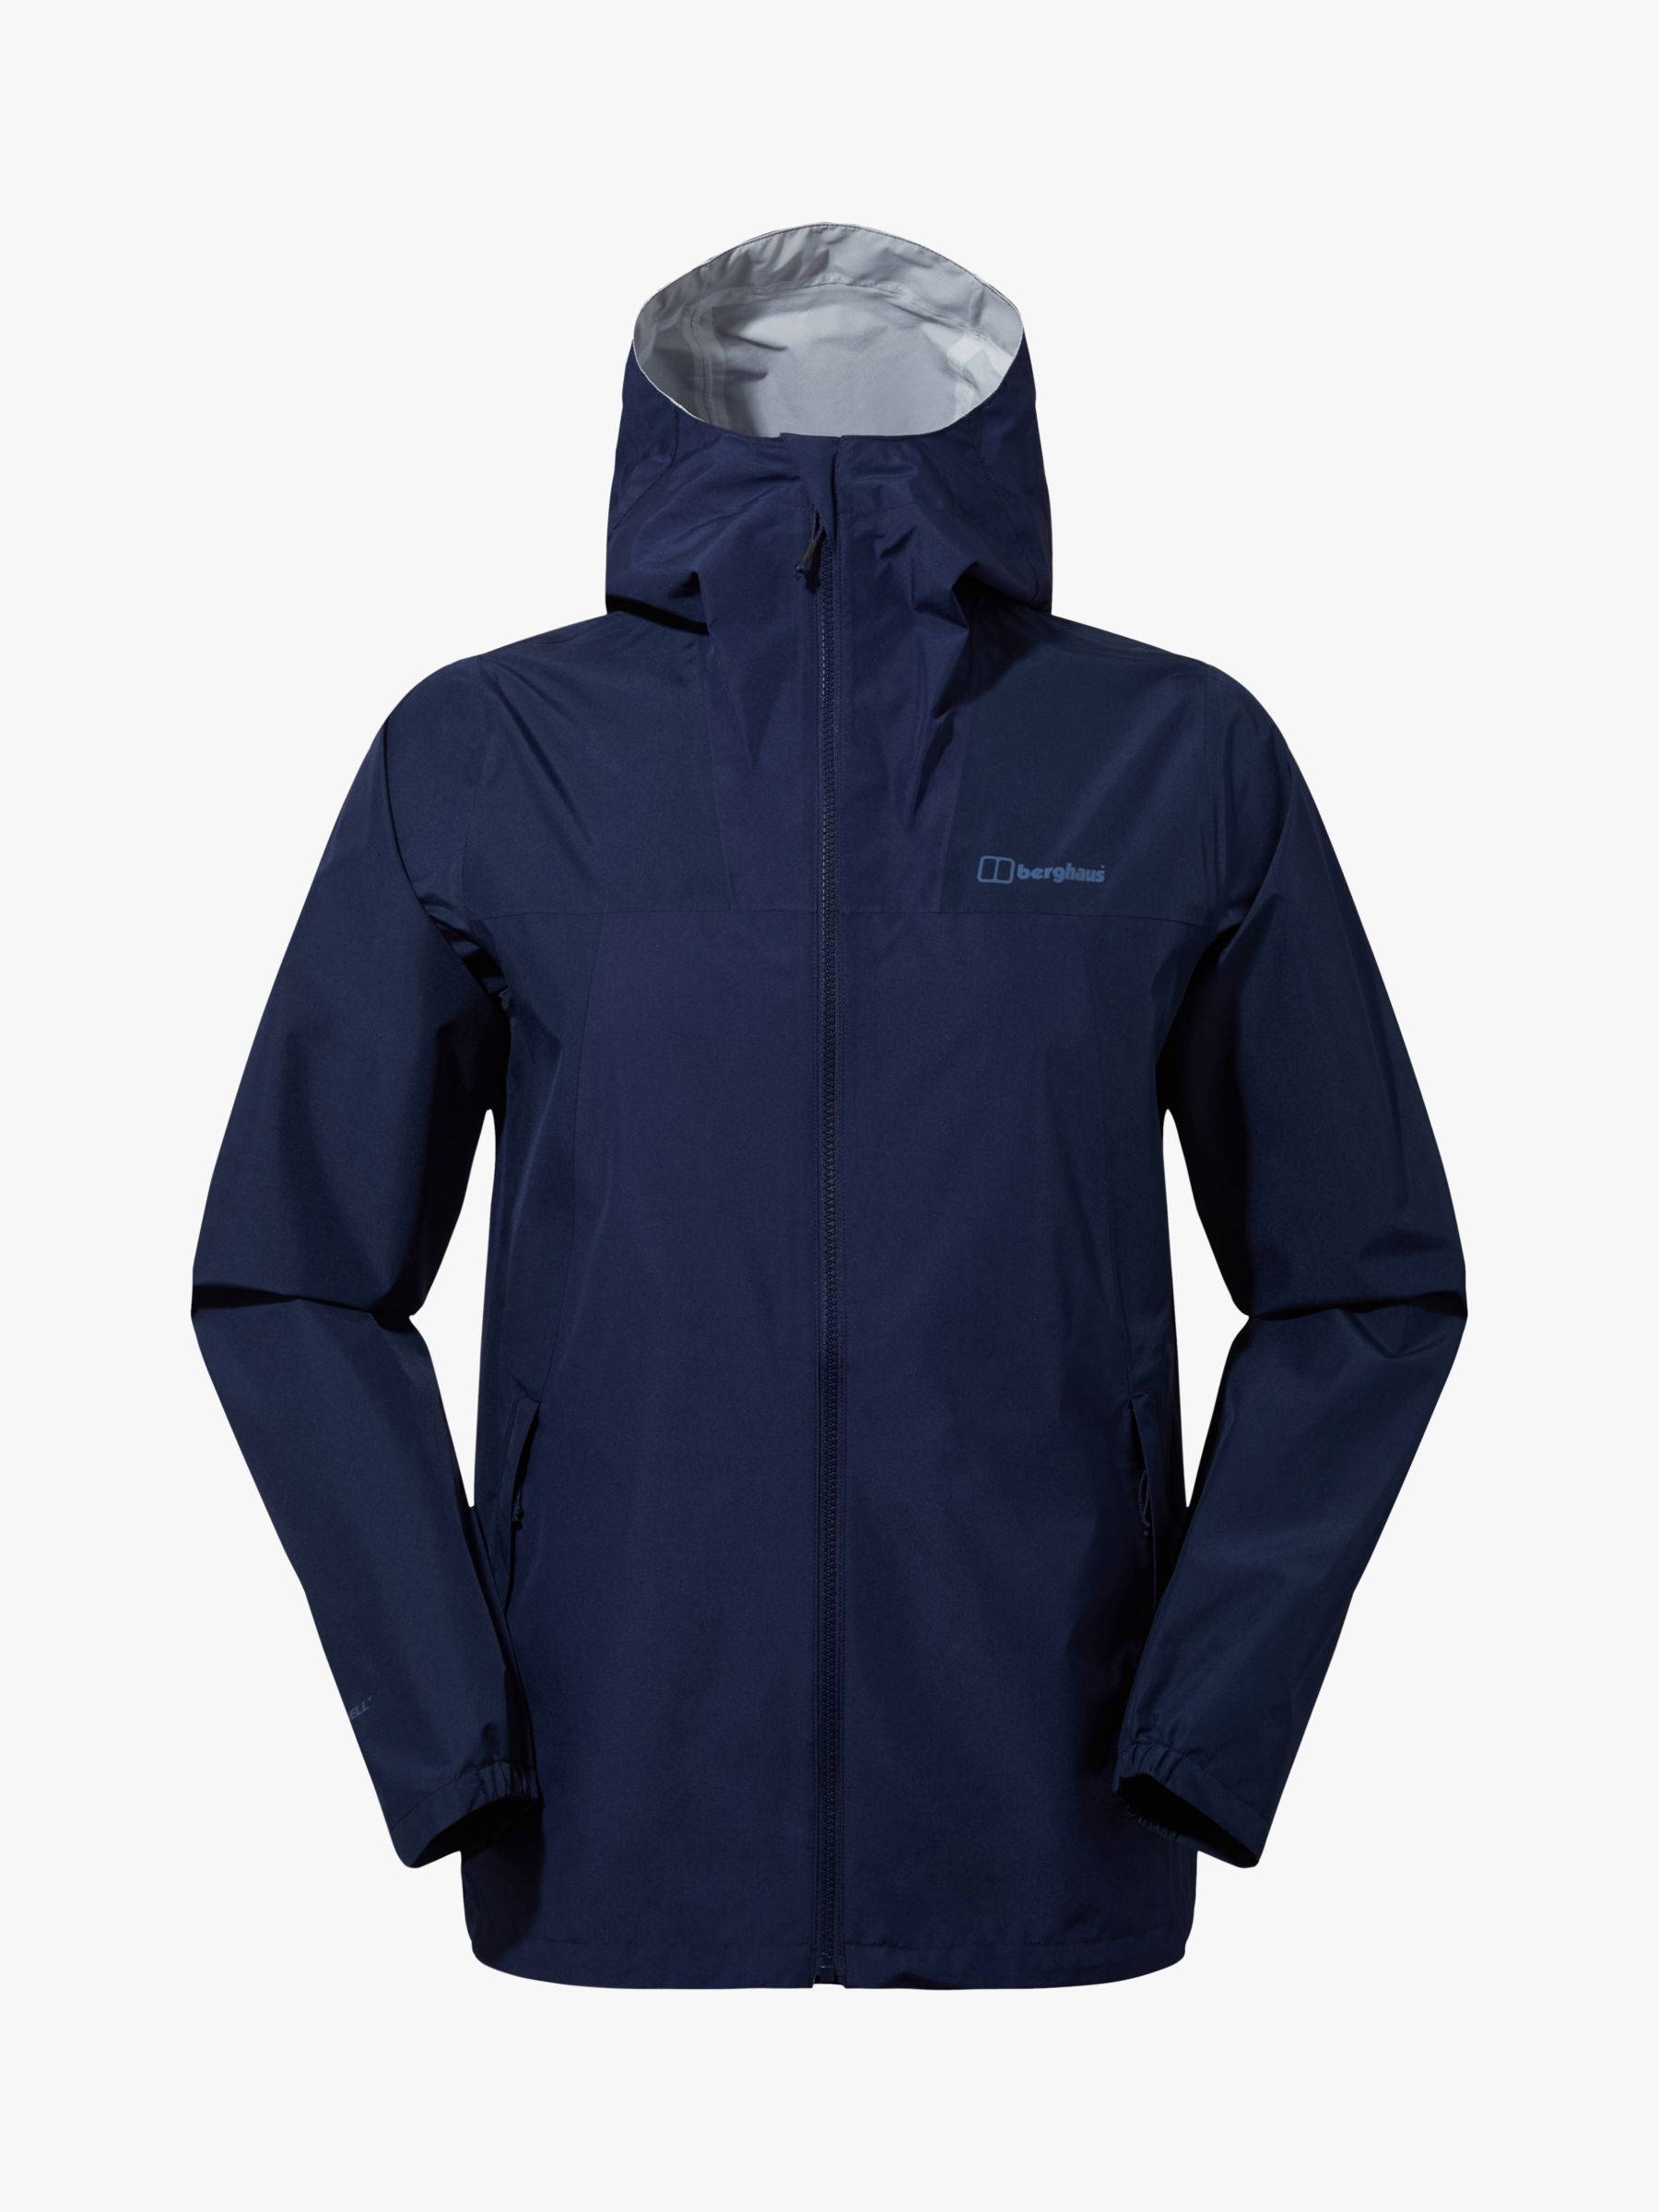 Berghaus Deluge Pro 3.0 Men's Waterproof Jacket, Navy, M